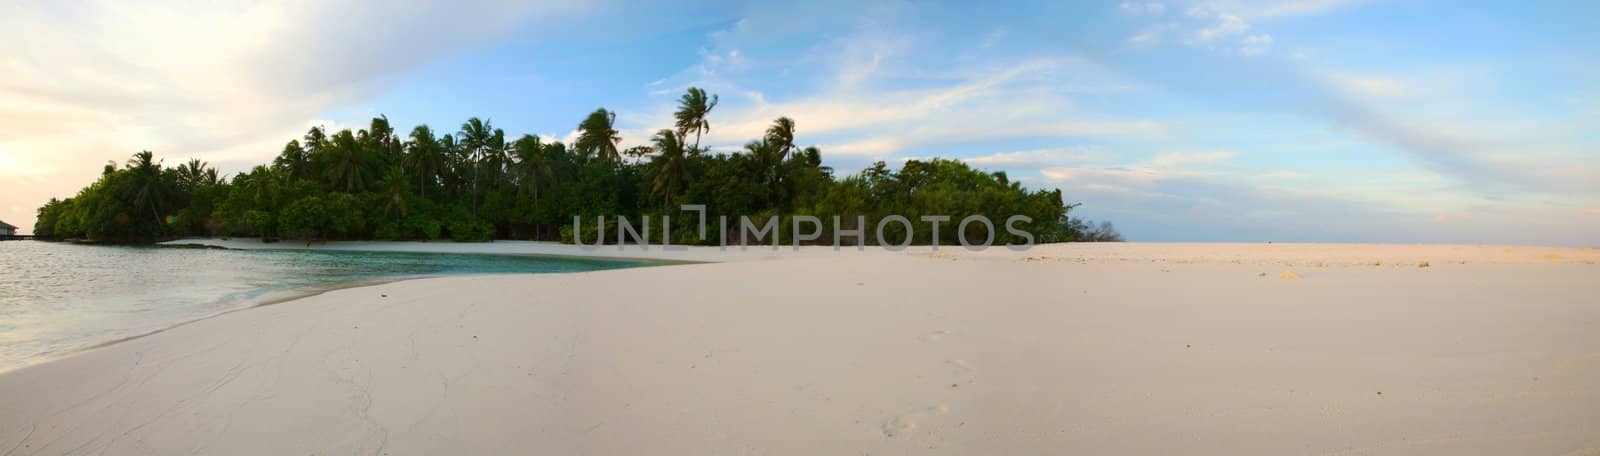 Island of Embudu in the Maldives